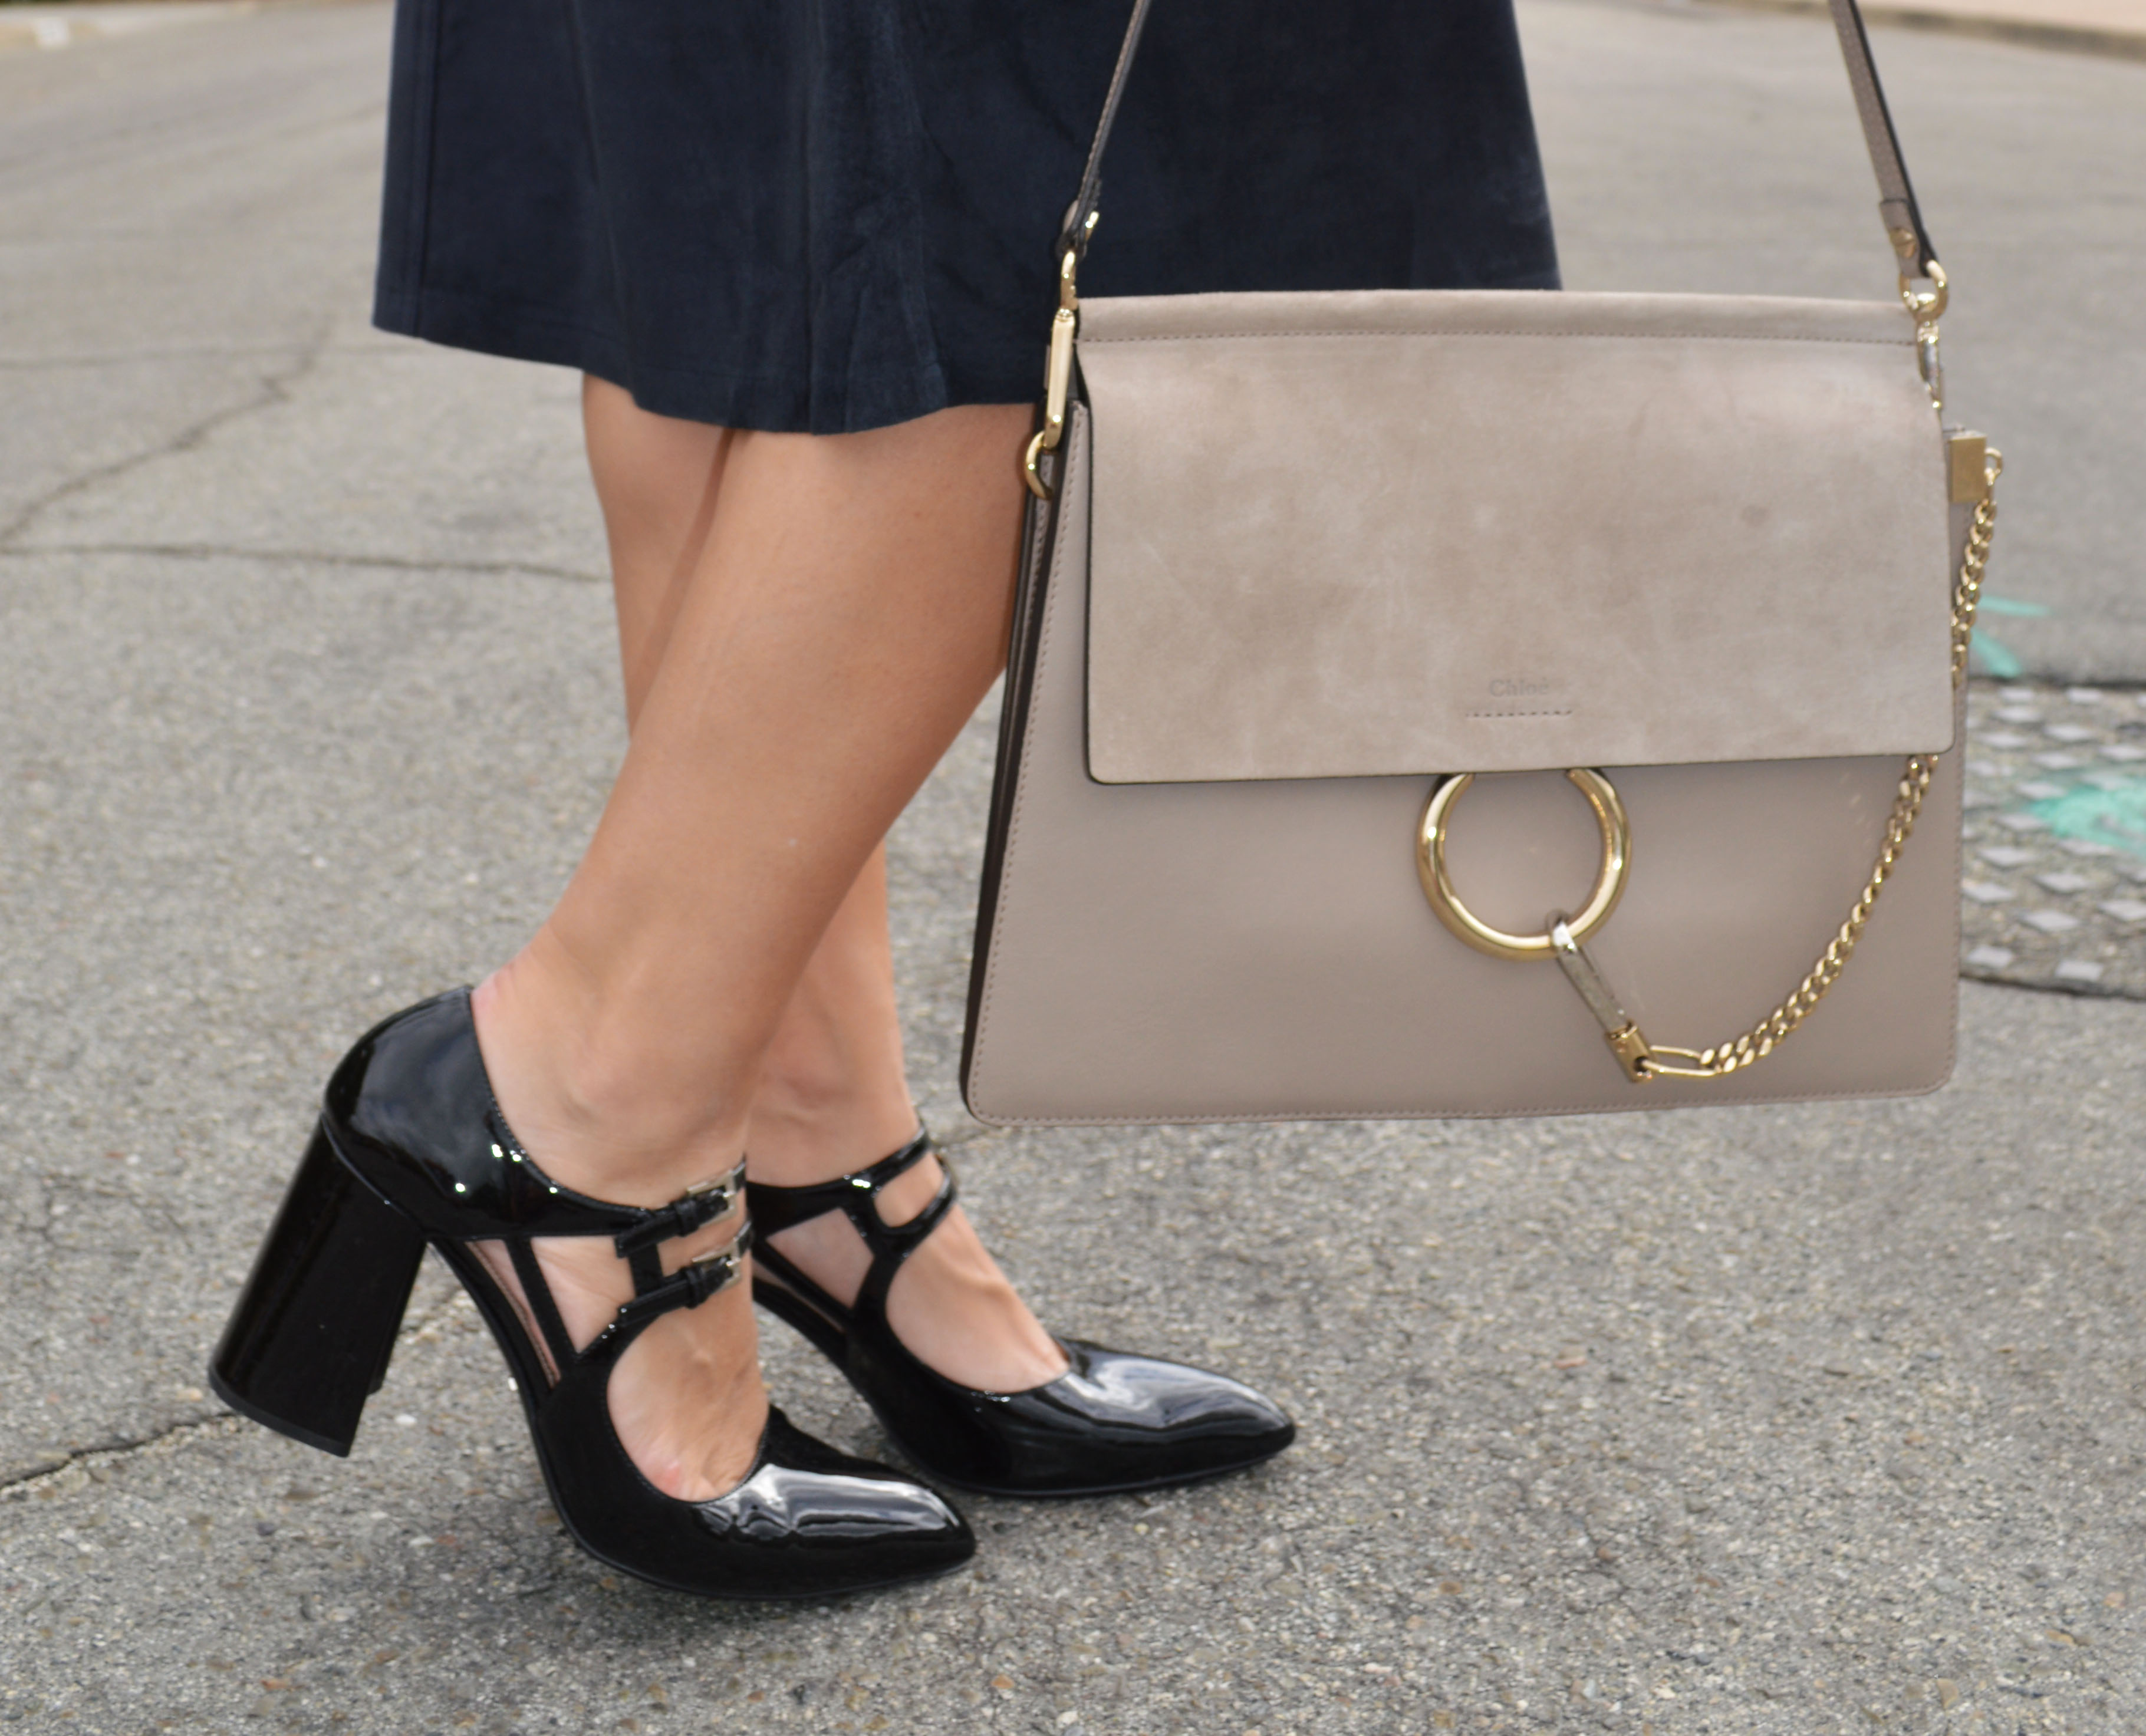 prada shoes chloe faye handbag fall outfit – Bay Area Fashionista